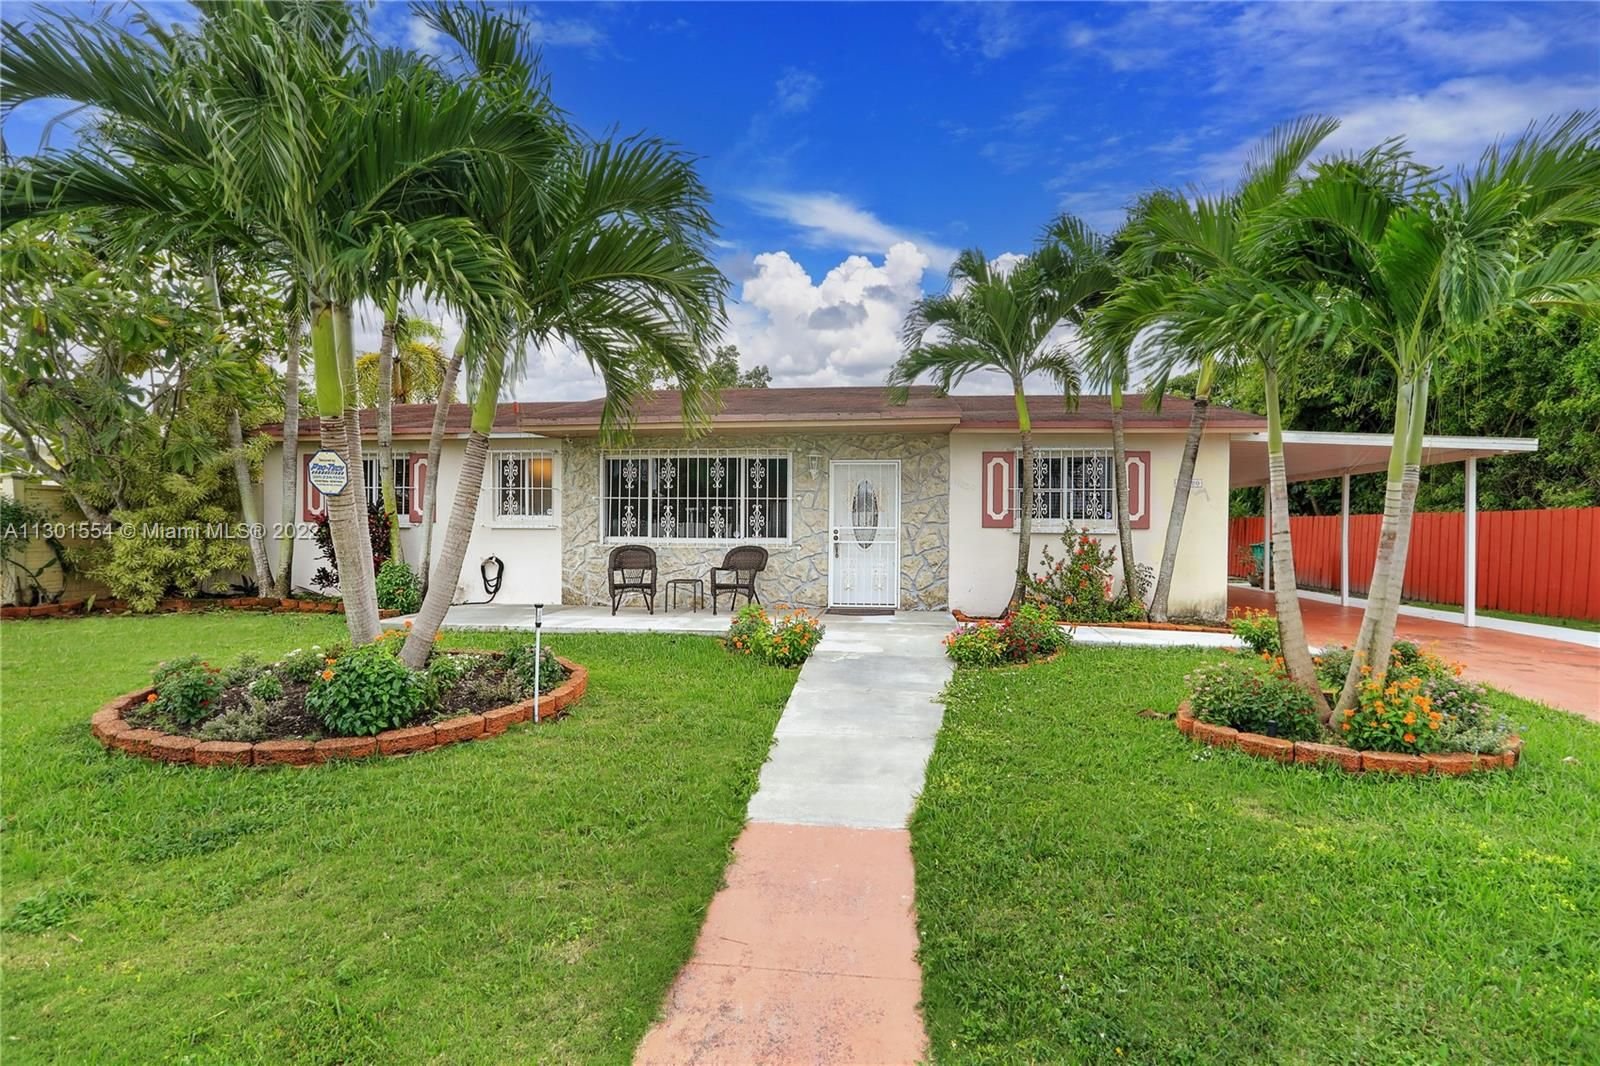 Real estate property located at 11820 199 St, Miami-Dade County, Miami, FL